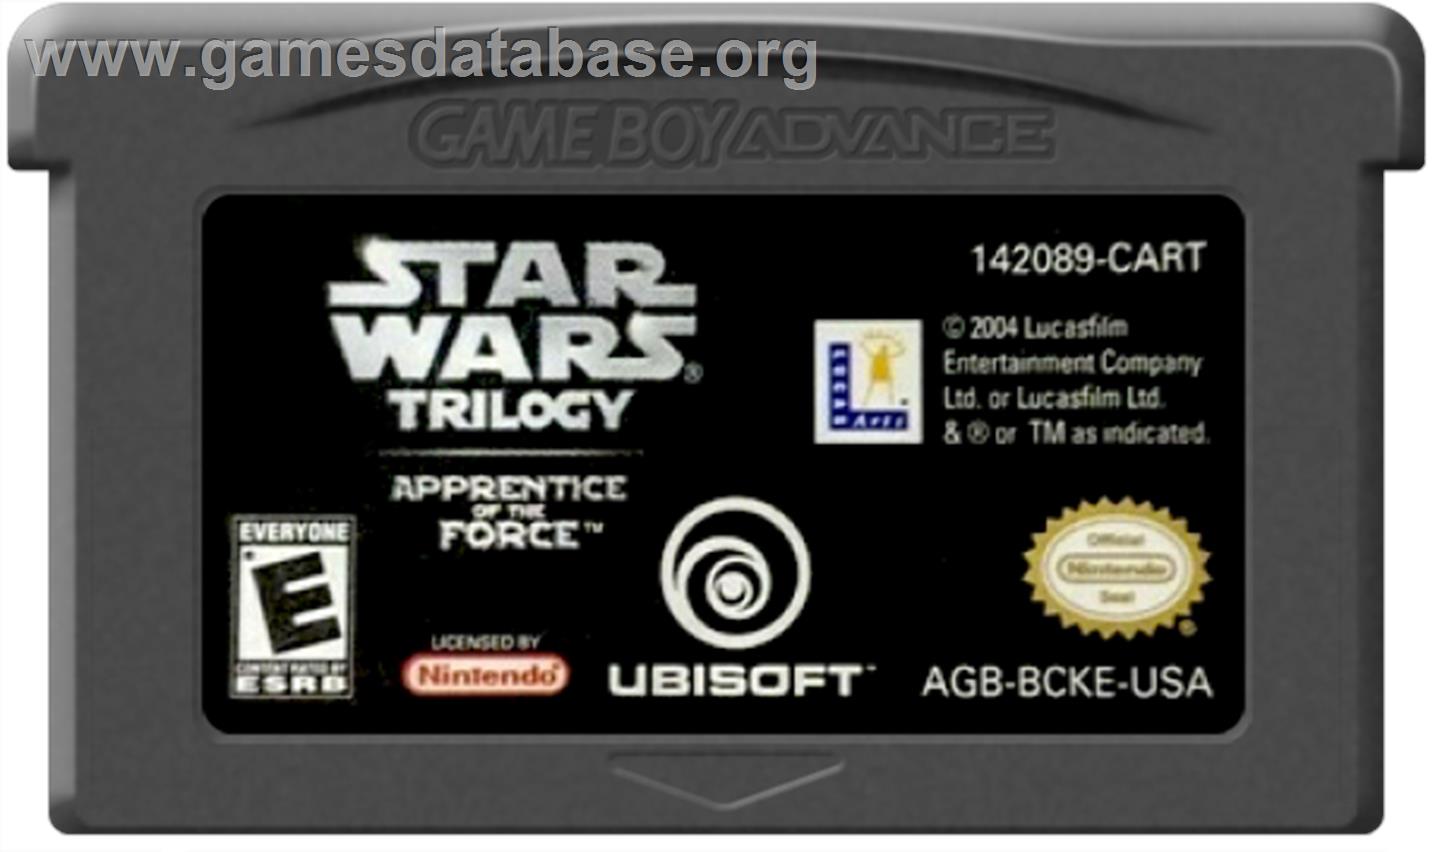 Star Wars Trilogy: Apprentice of the Force - Nintendo Game Boy Advance - Artwork - Cartridge